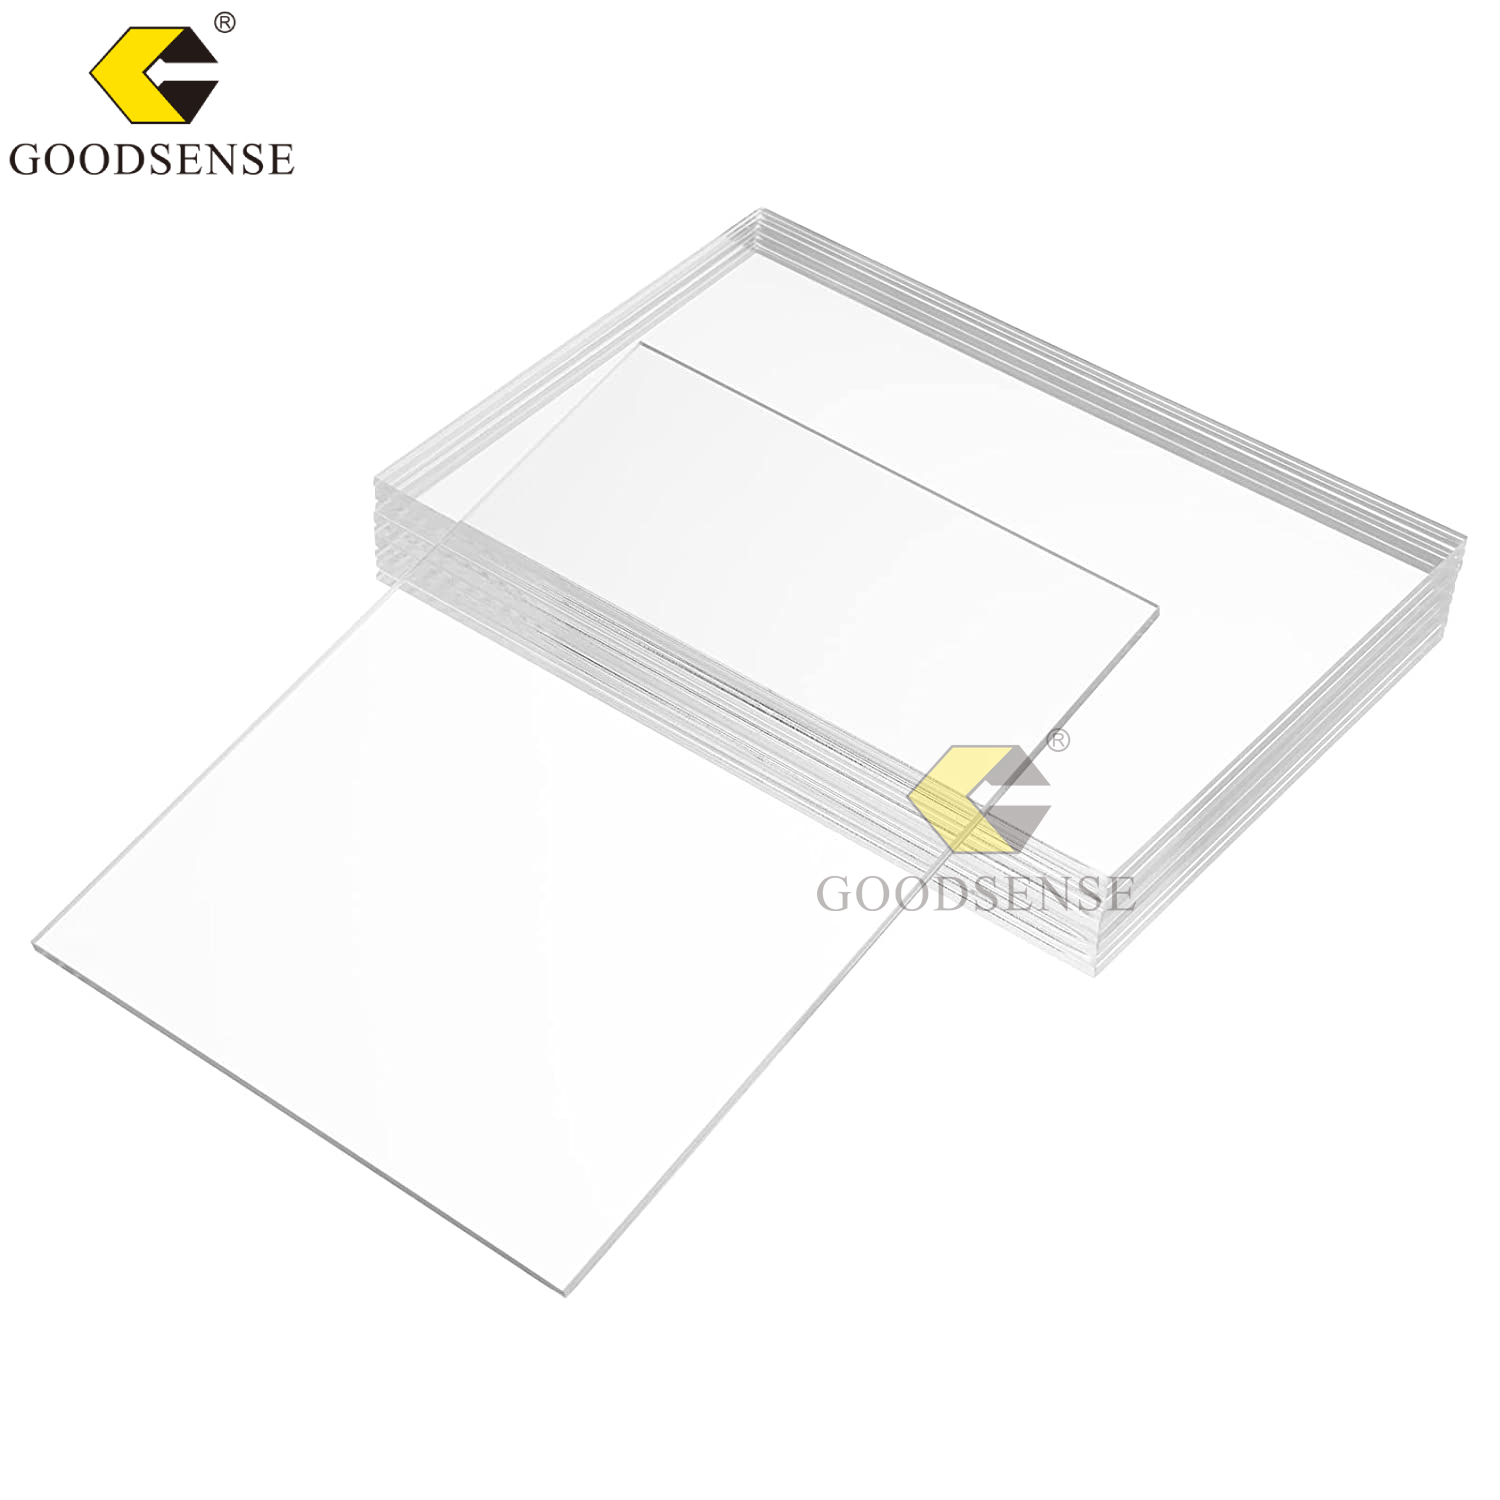 Goodsense-lámina de plástico transparente de plexiglás, tablero acrílico de 2mm/3mm/4mm/5mm de espesor, hoja de plexiglás transparente